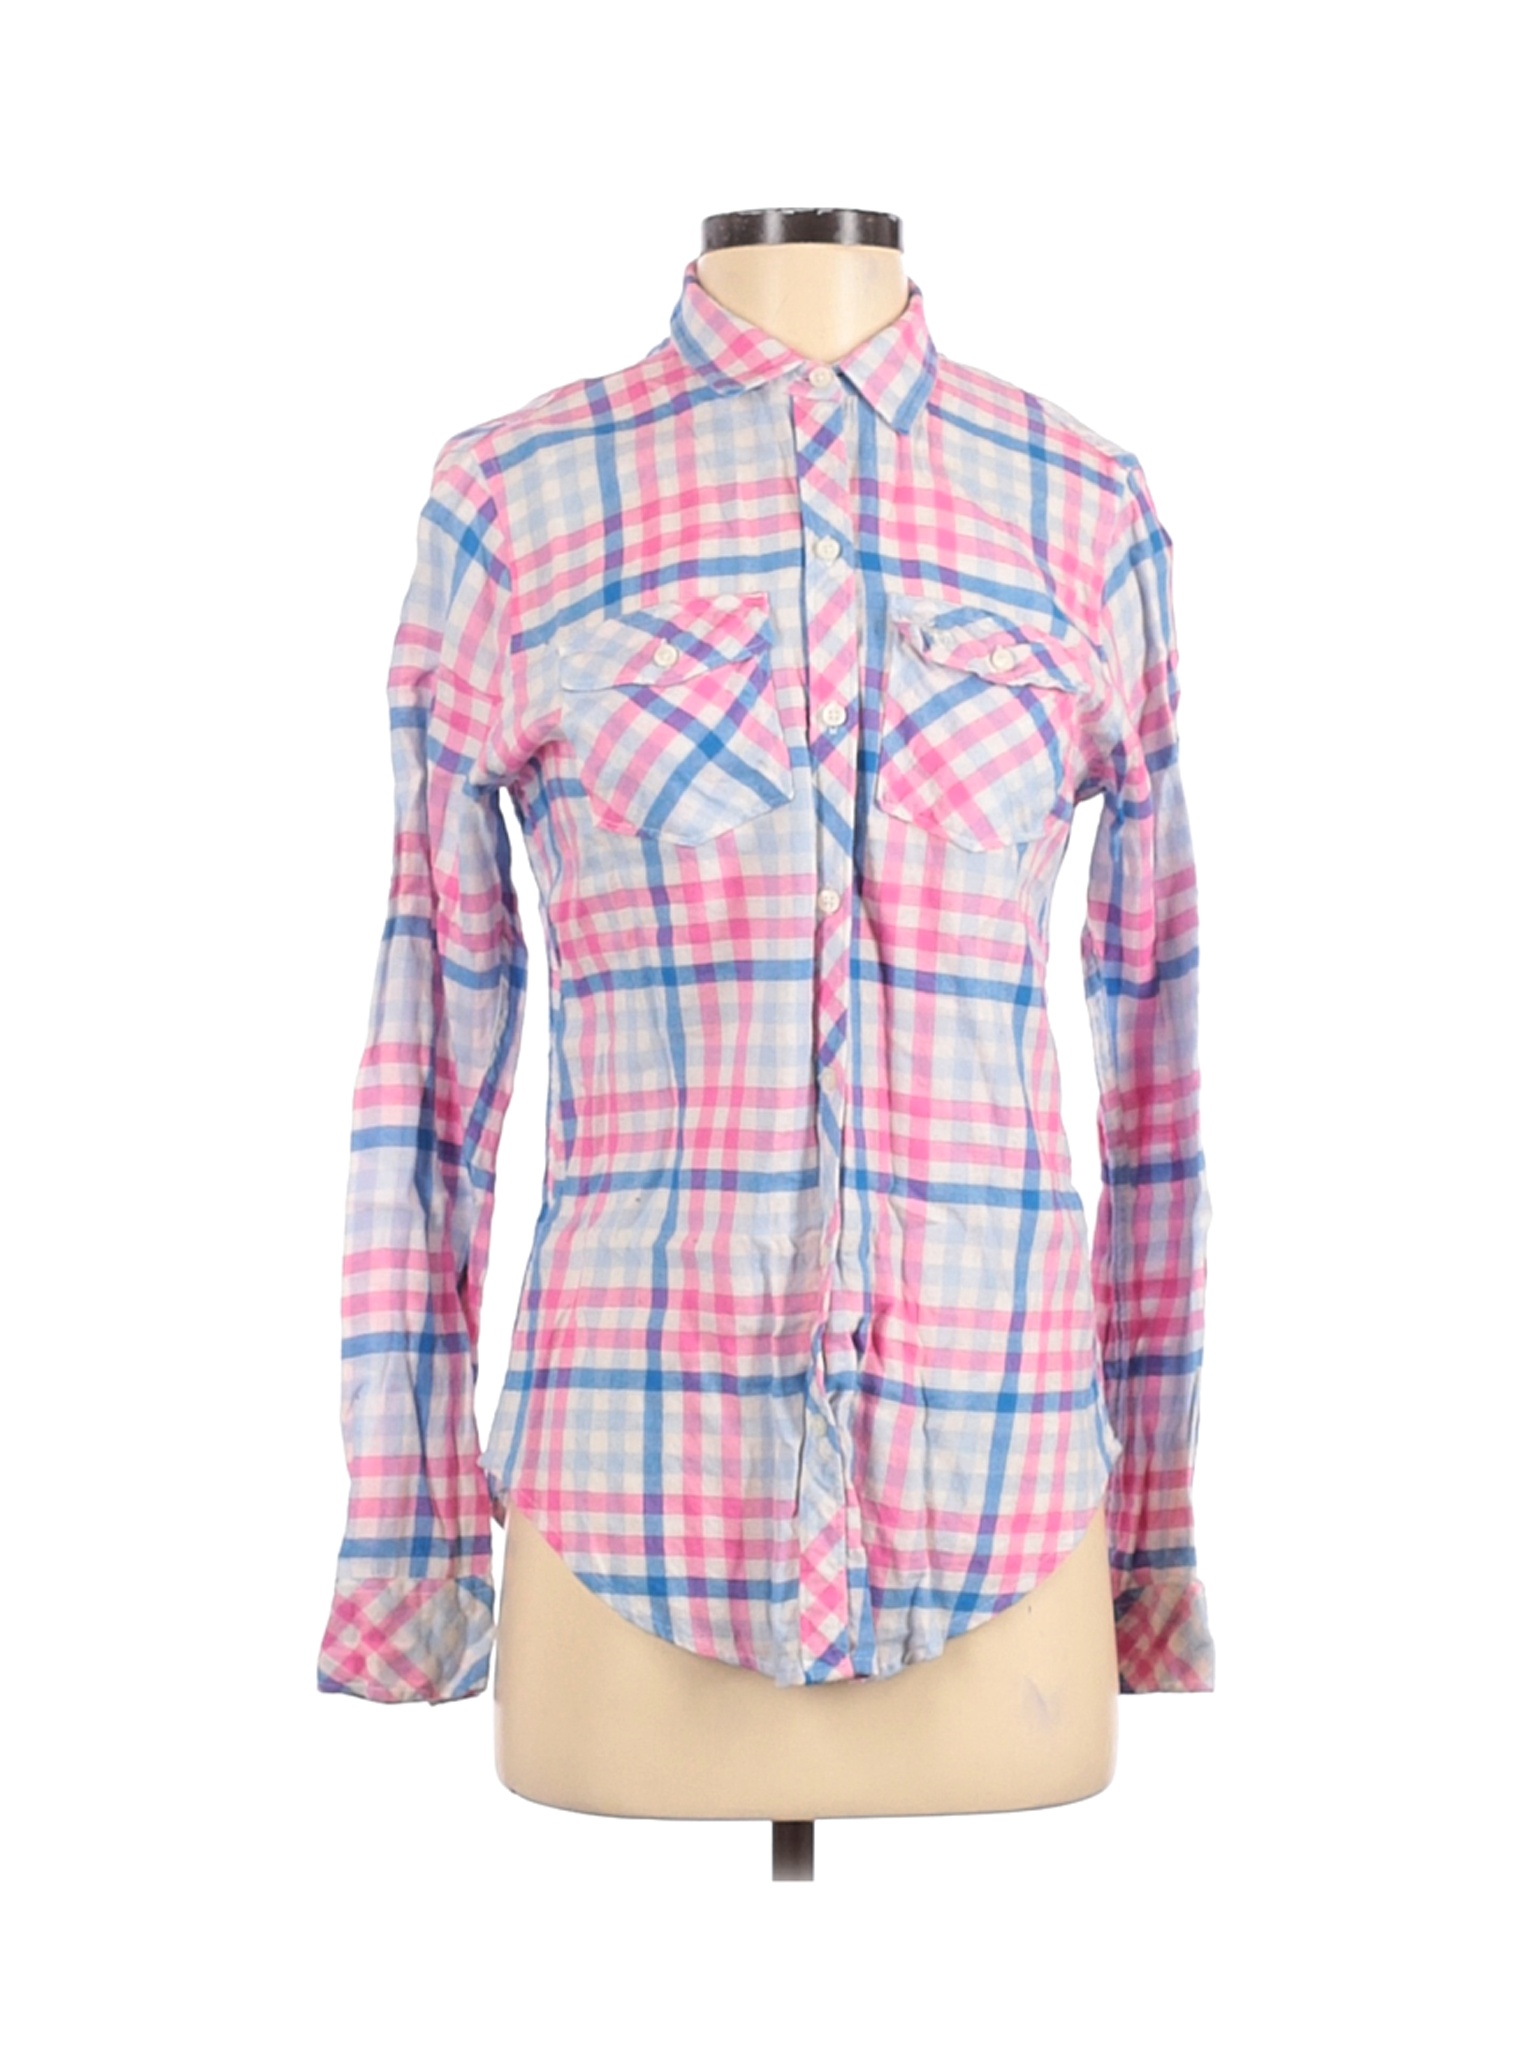 Abercrombie & Fitch Women Pink Long Sleeve Button-Down Shirt XS | eBay